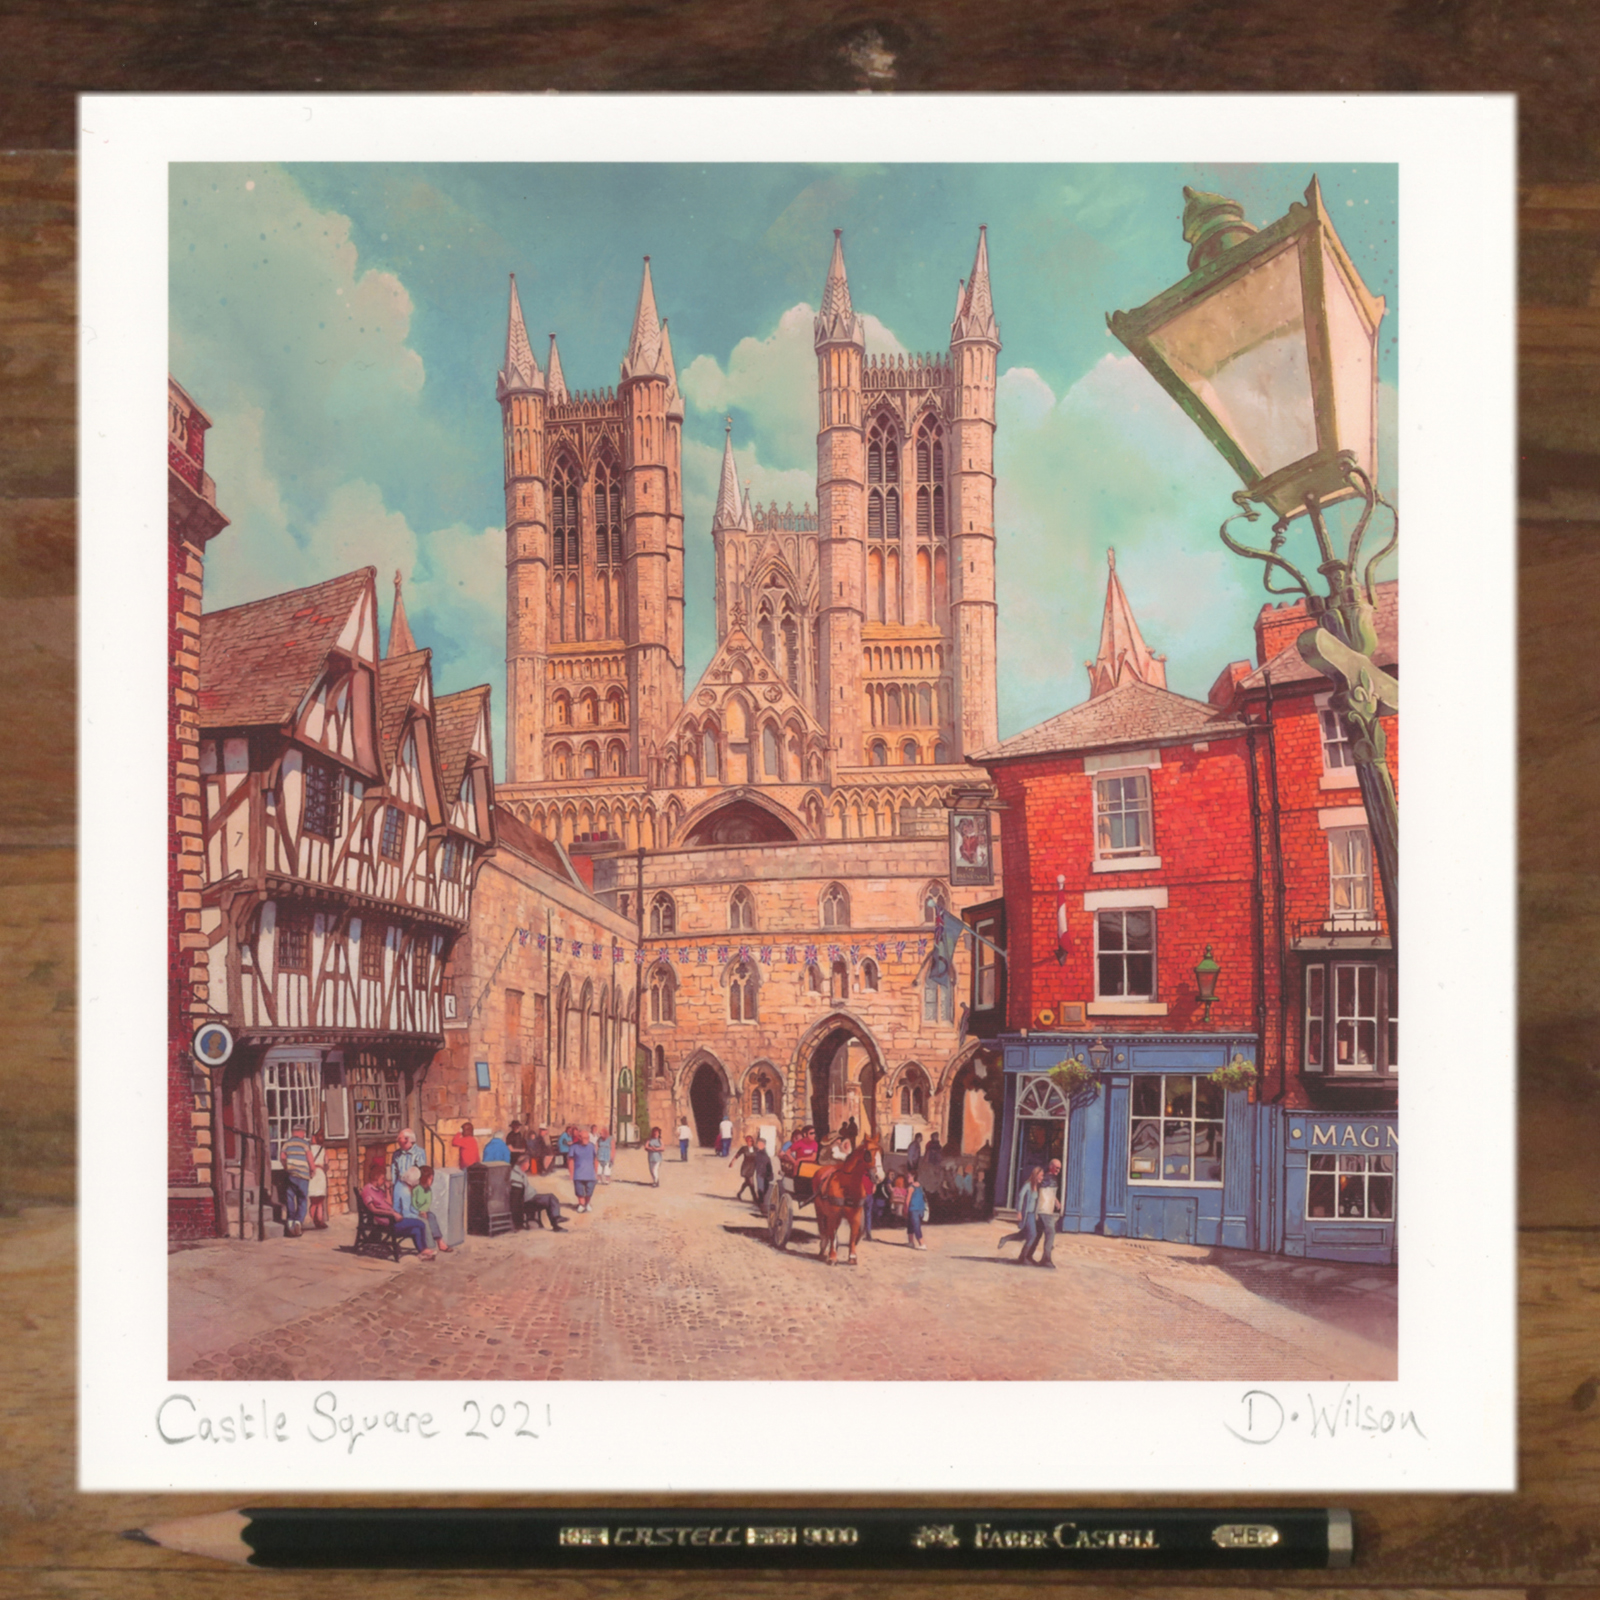 Castle Square Illustration - Postcard Print (Open Edition)